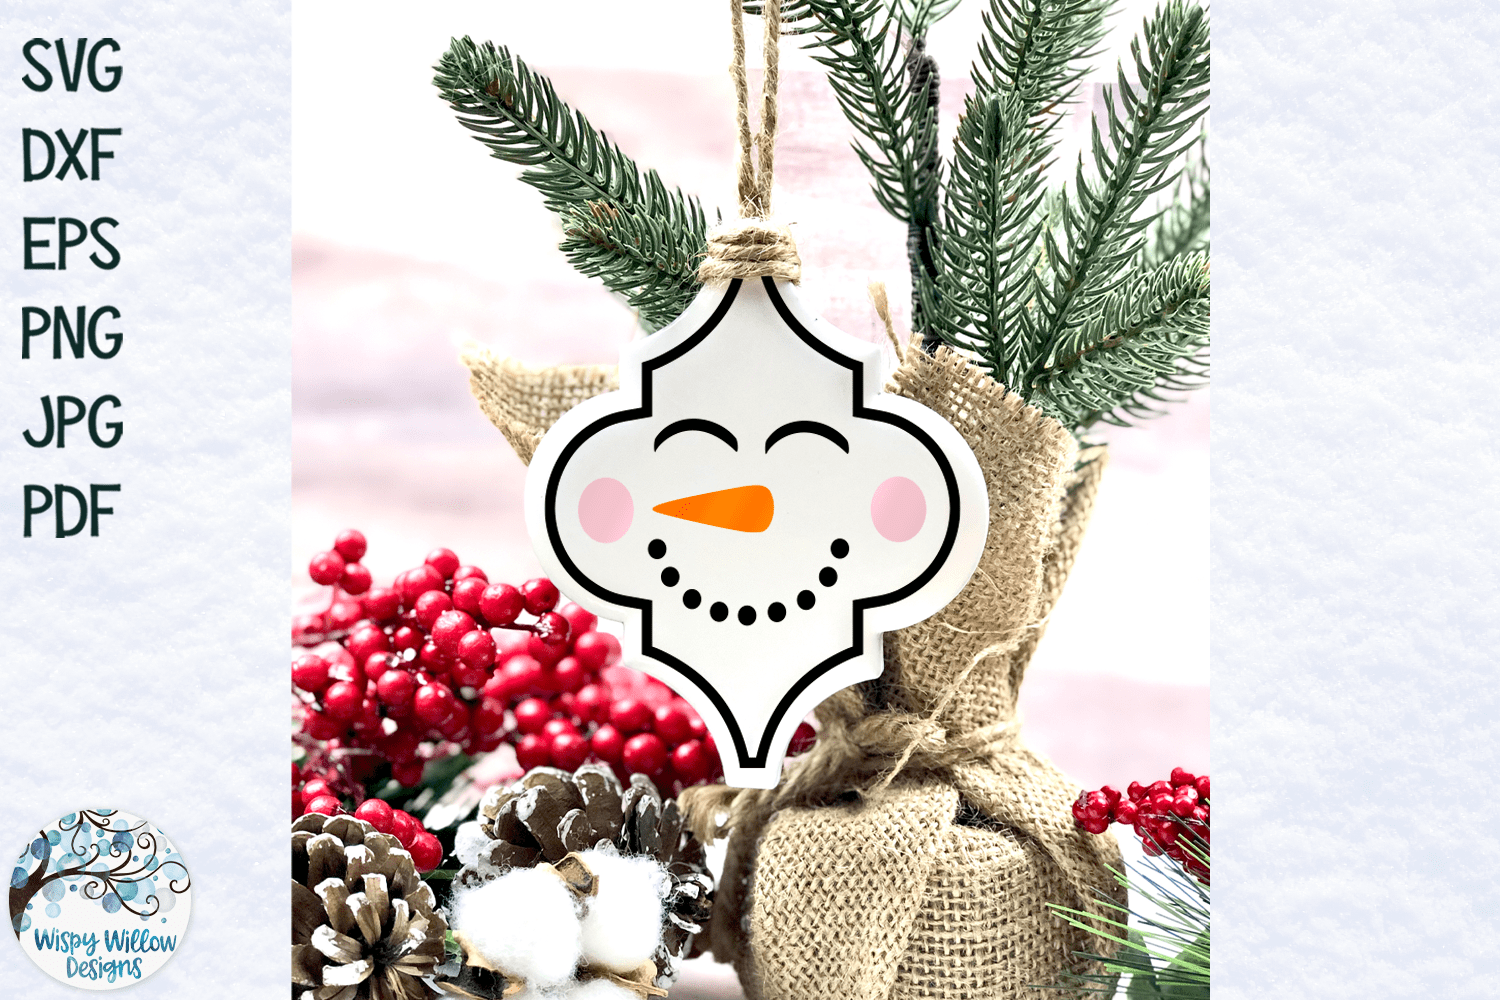 Arabesque Snowman Christmas Ornament SVG Bundle Wispy Willow Designs Company